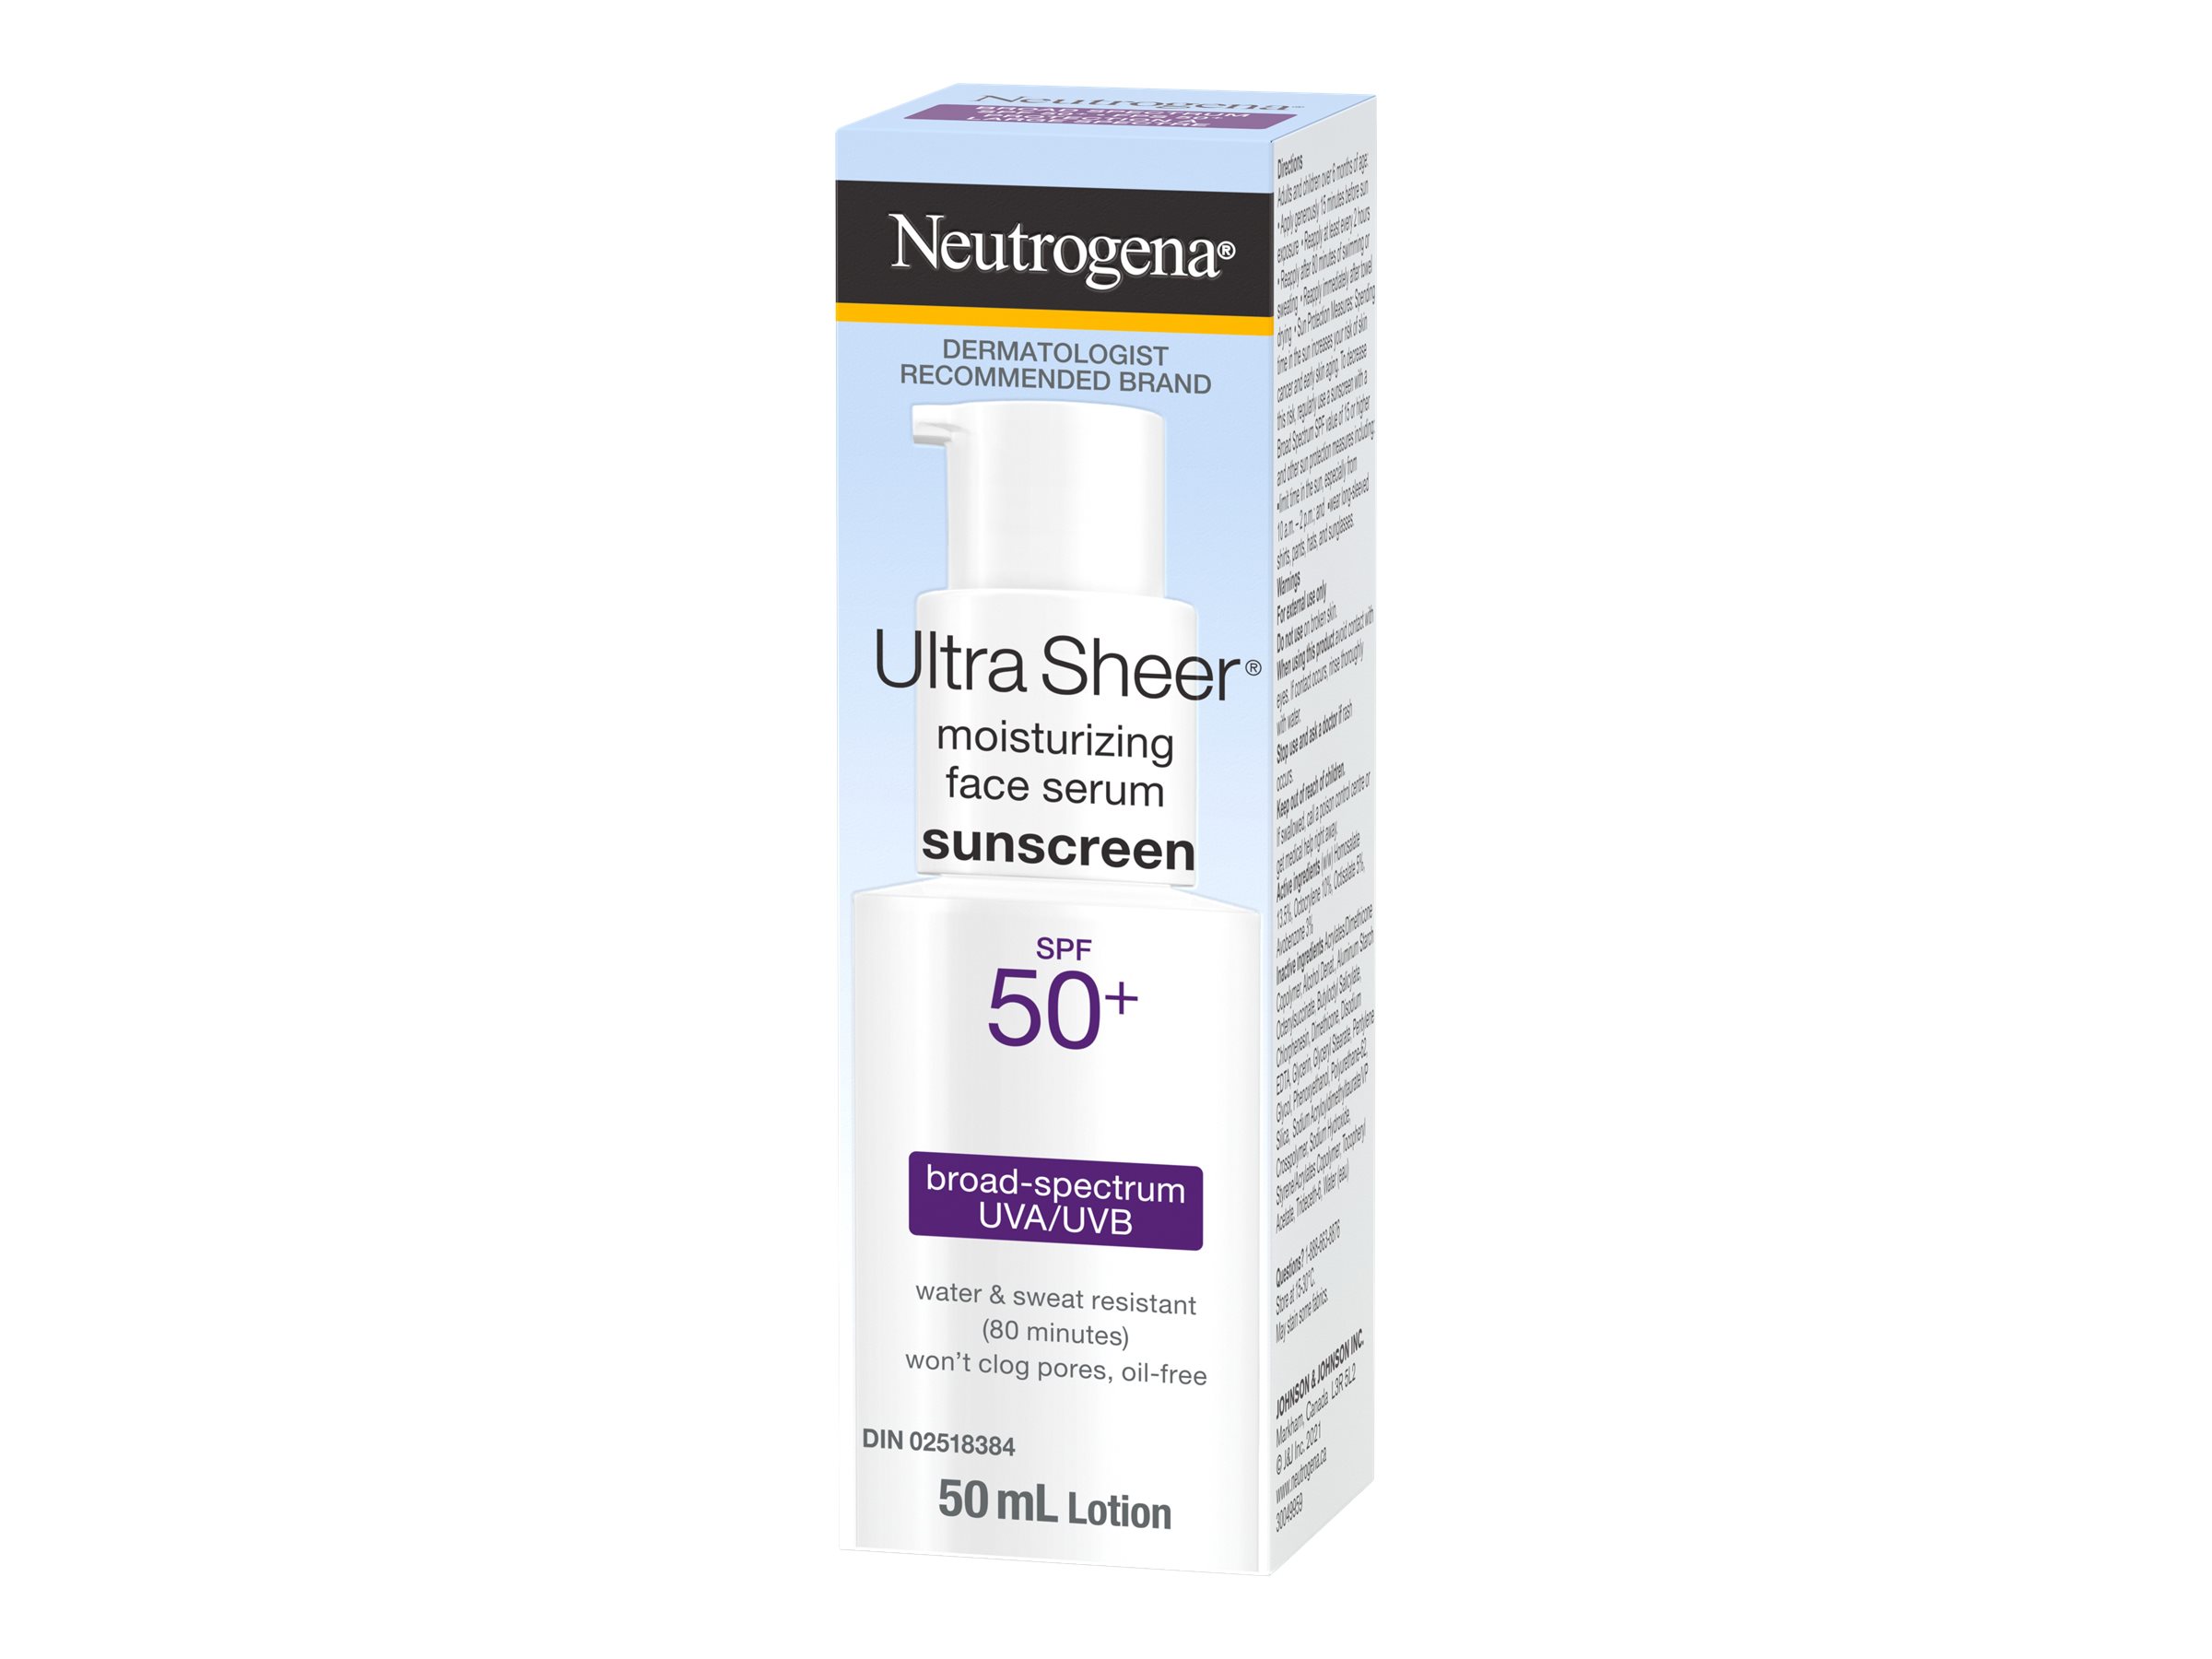  Neutrogena Ultra Sheer Moisturizing Face Serum